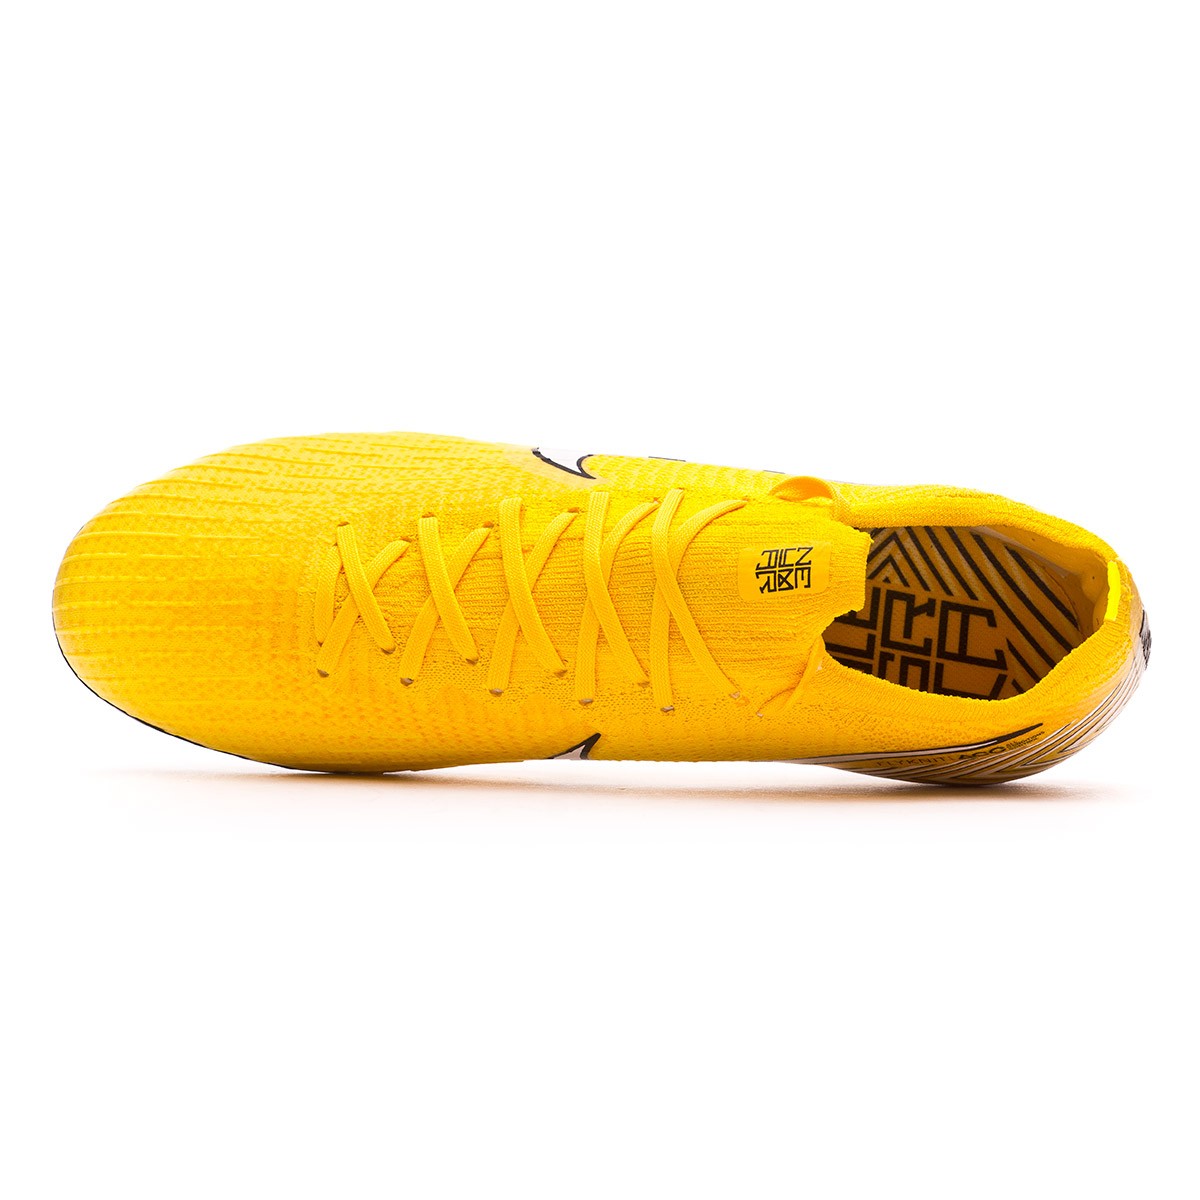 neymar yellow boots